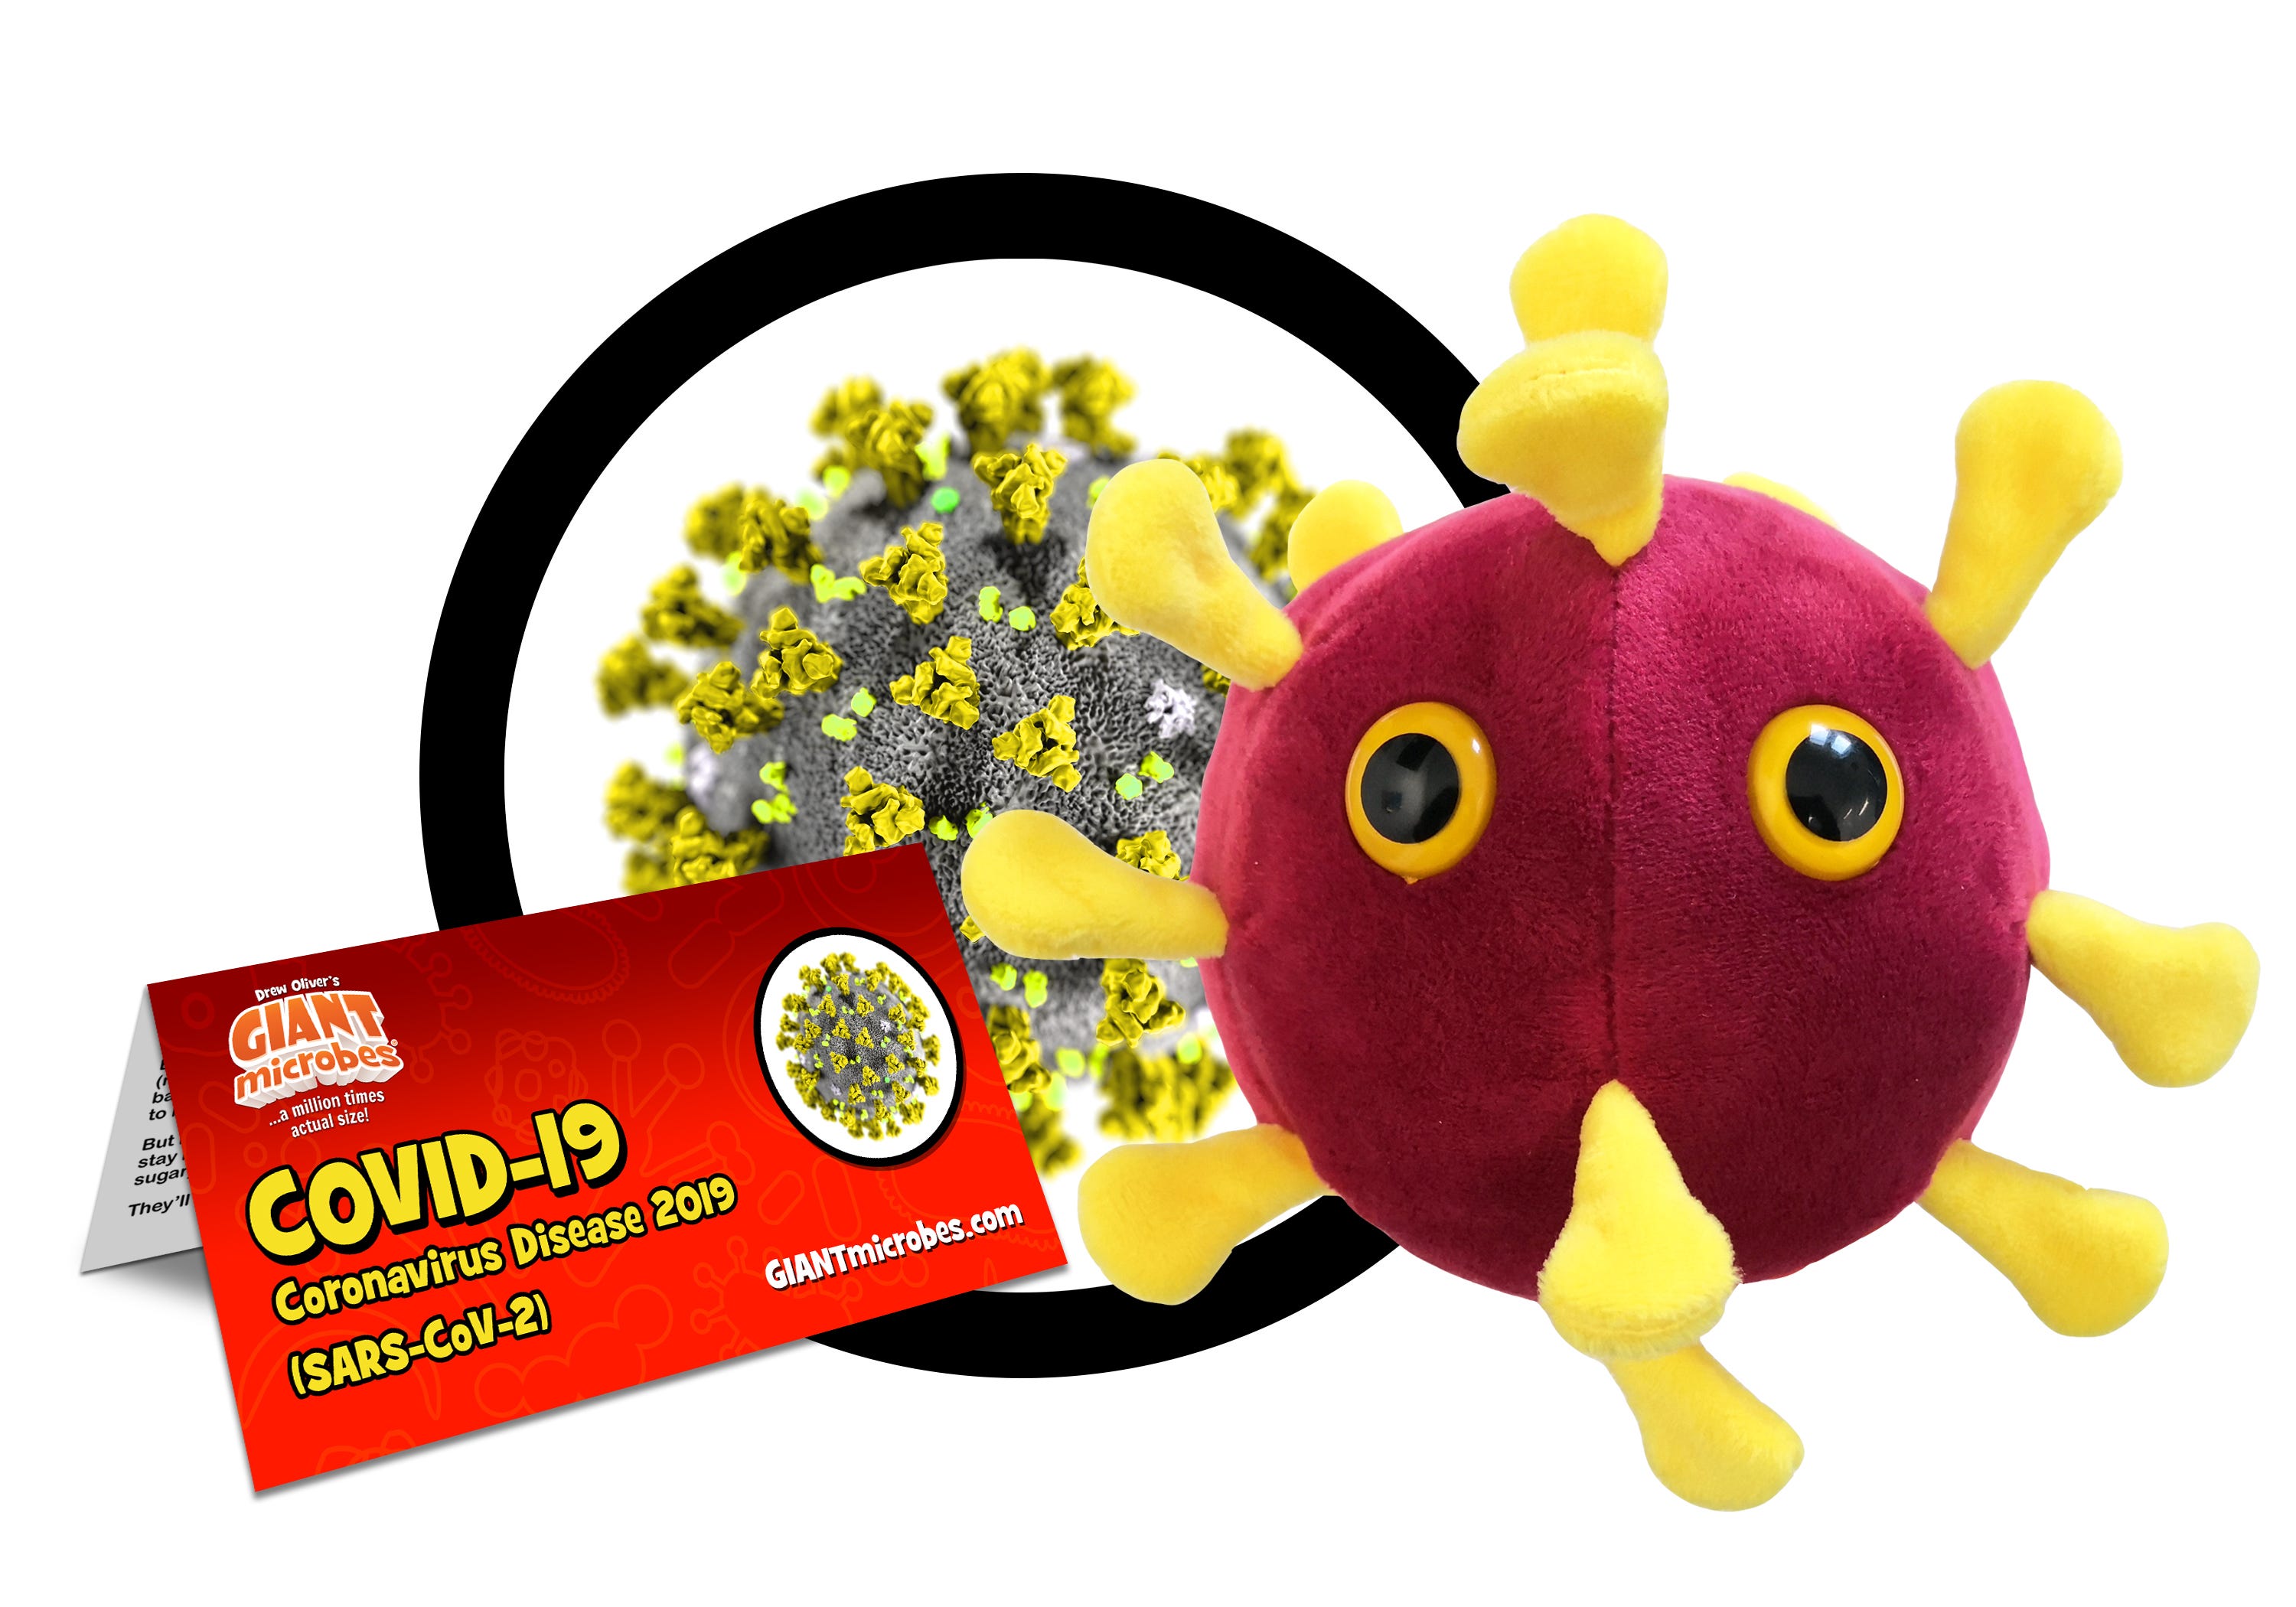 microbe stuffed animals